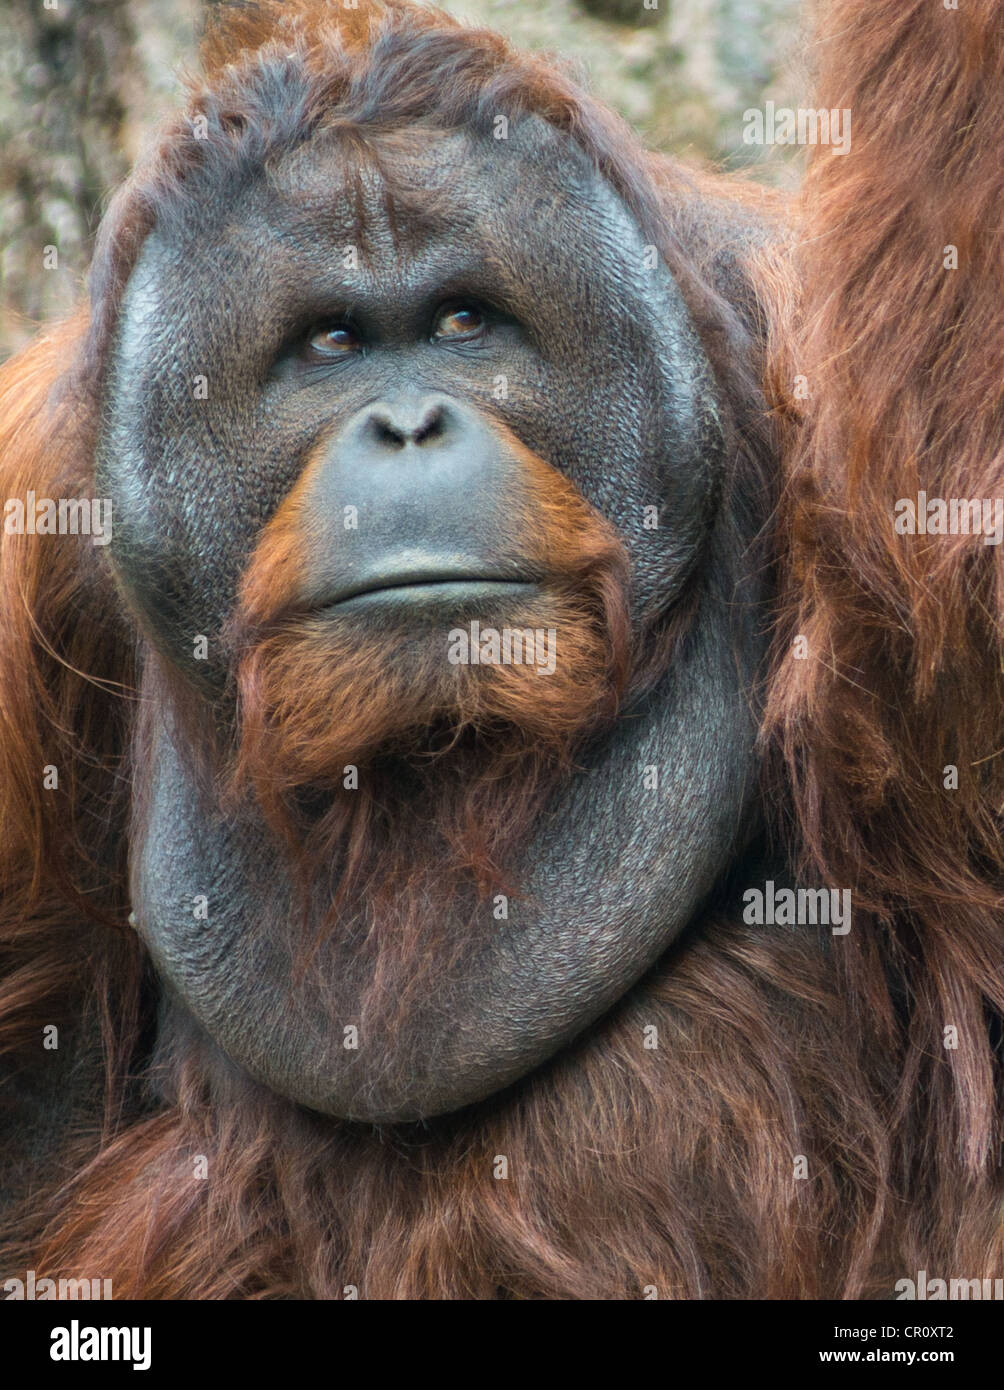 Mature Orangutan. Stock Photo